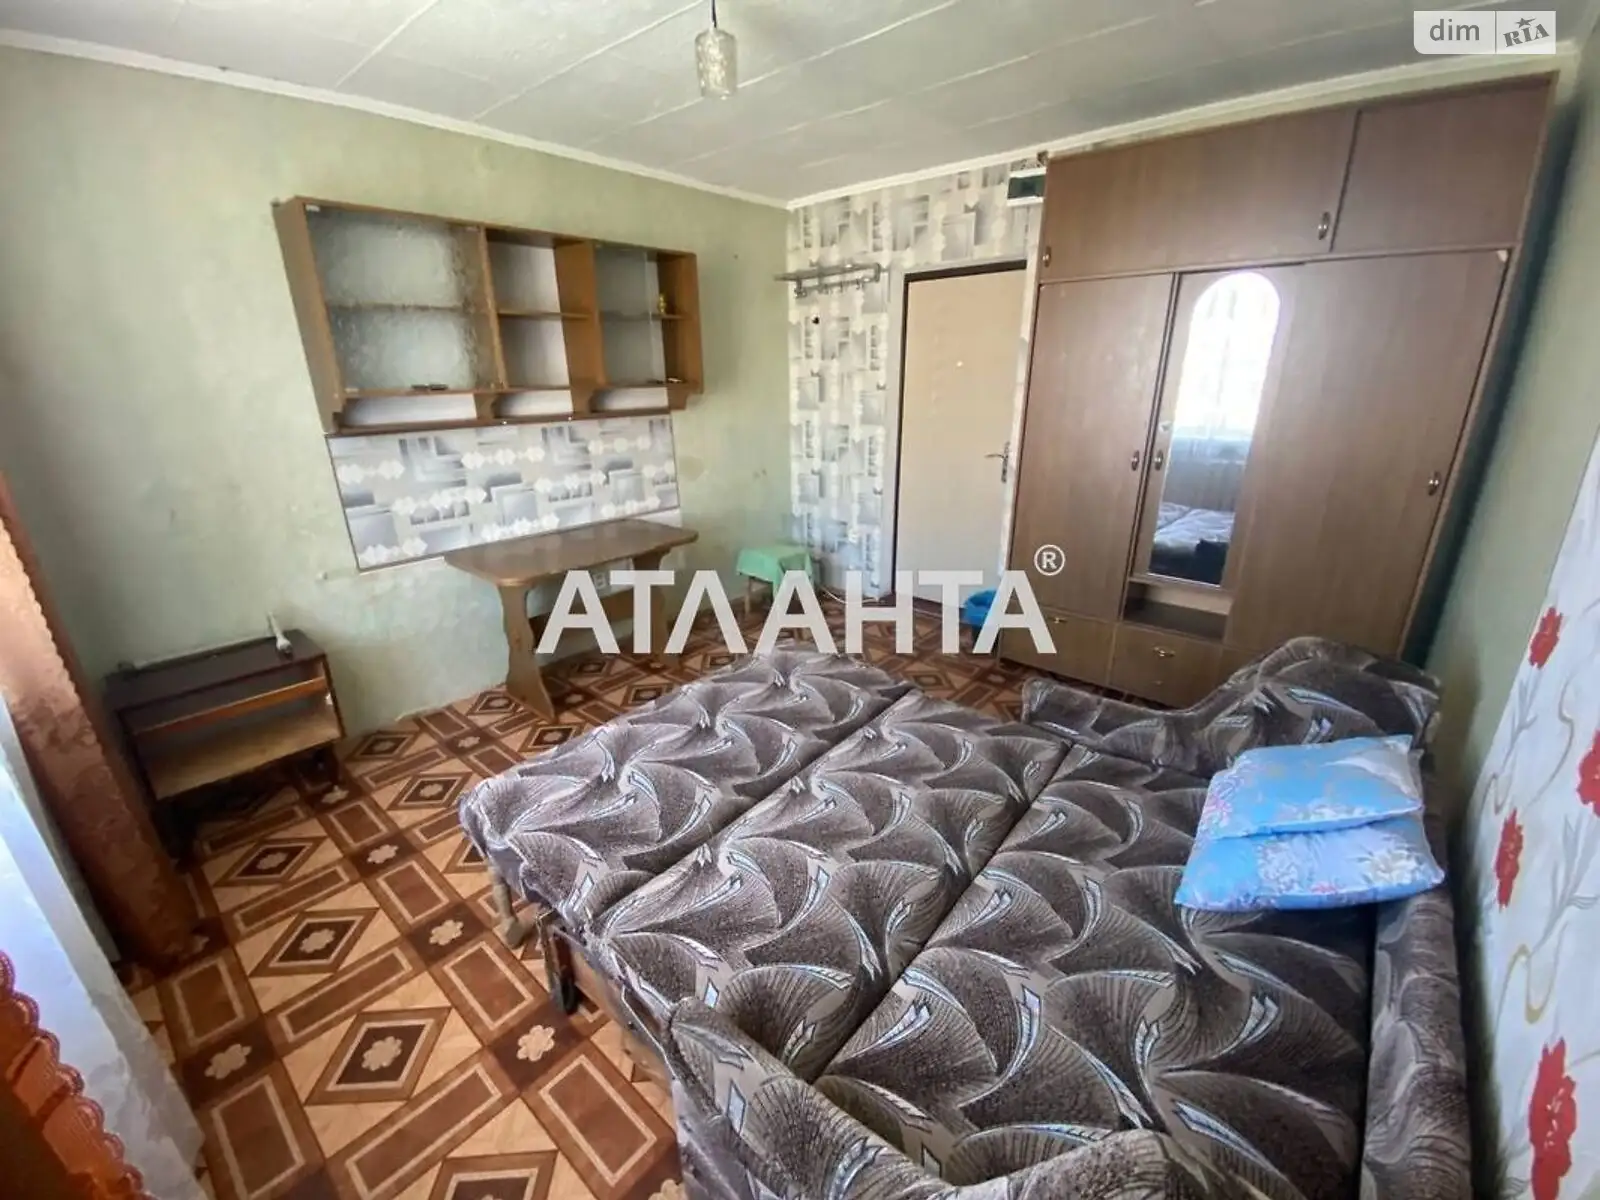 Продается комната 21.9 кв. м в Черноморске, цена: 5800 $ - фото 1